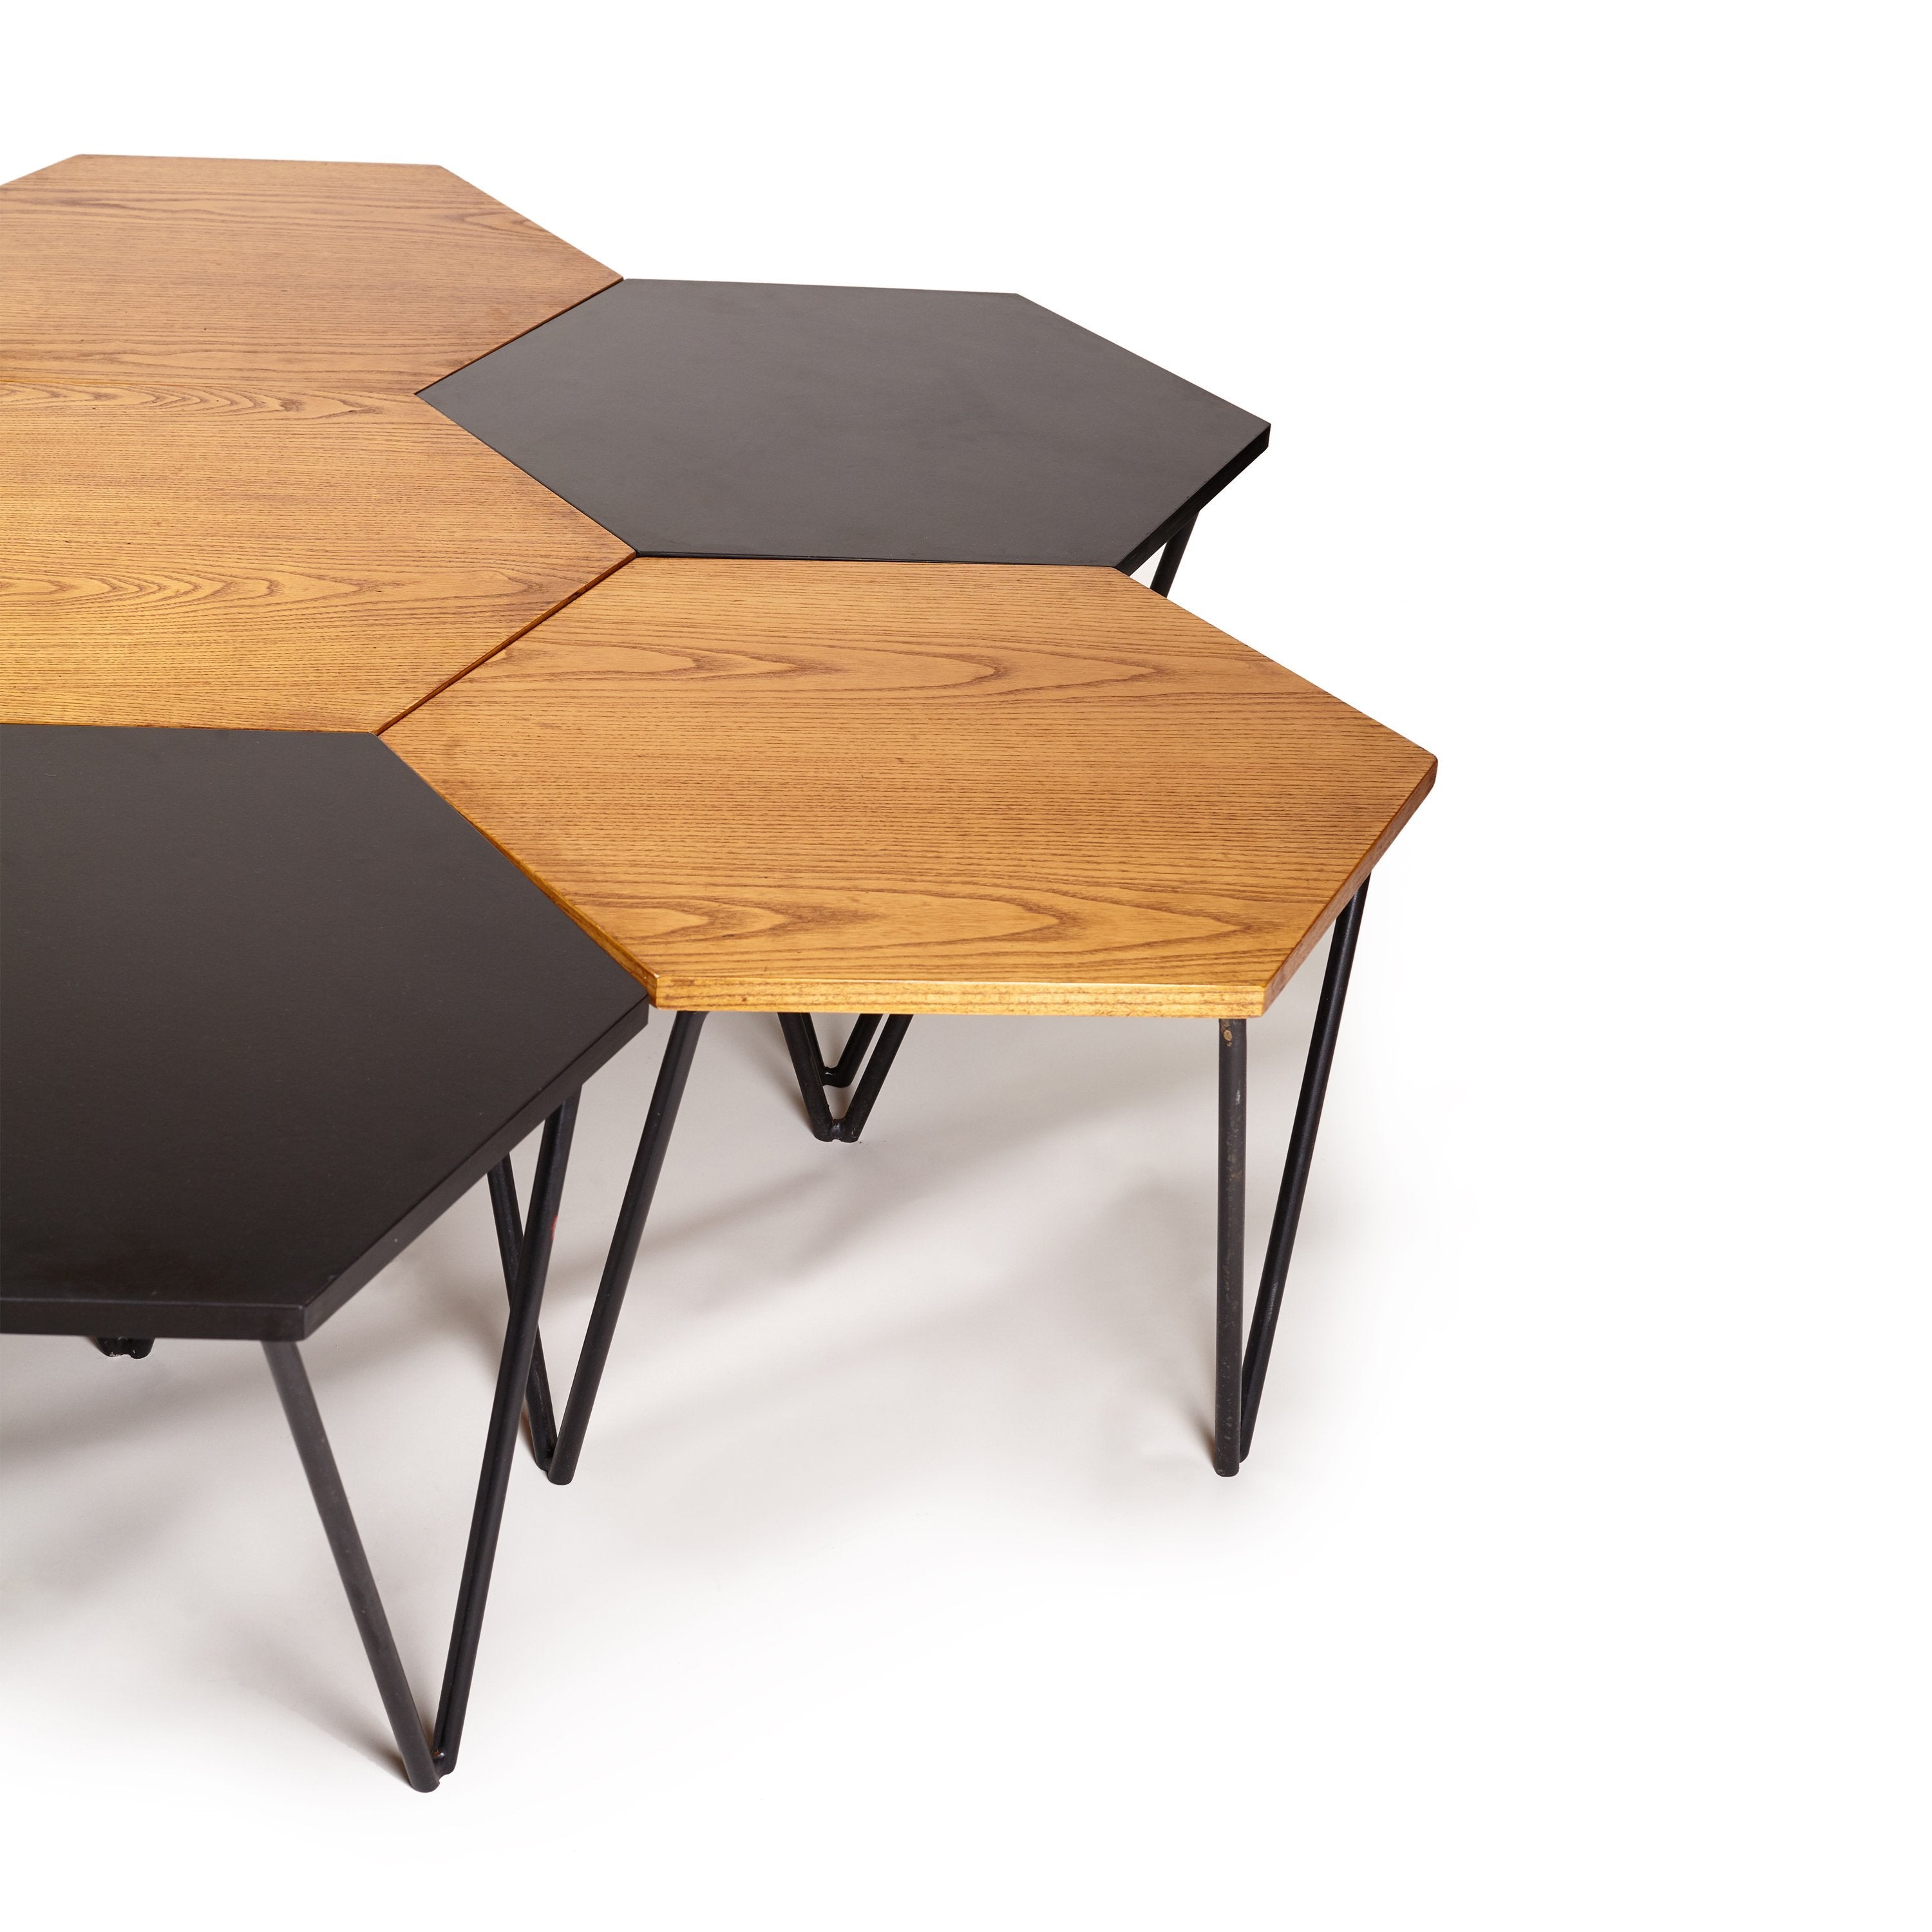 A Set of 7 Low Tables, Gio Ponti, 1950s - ONEROOM